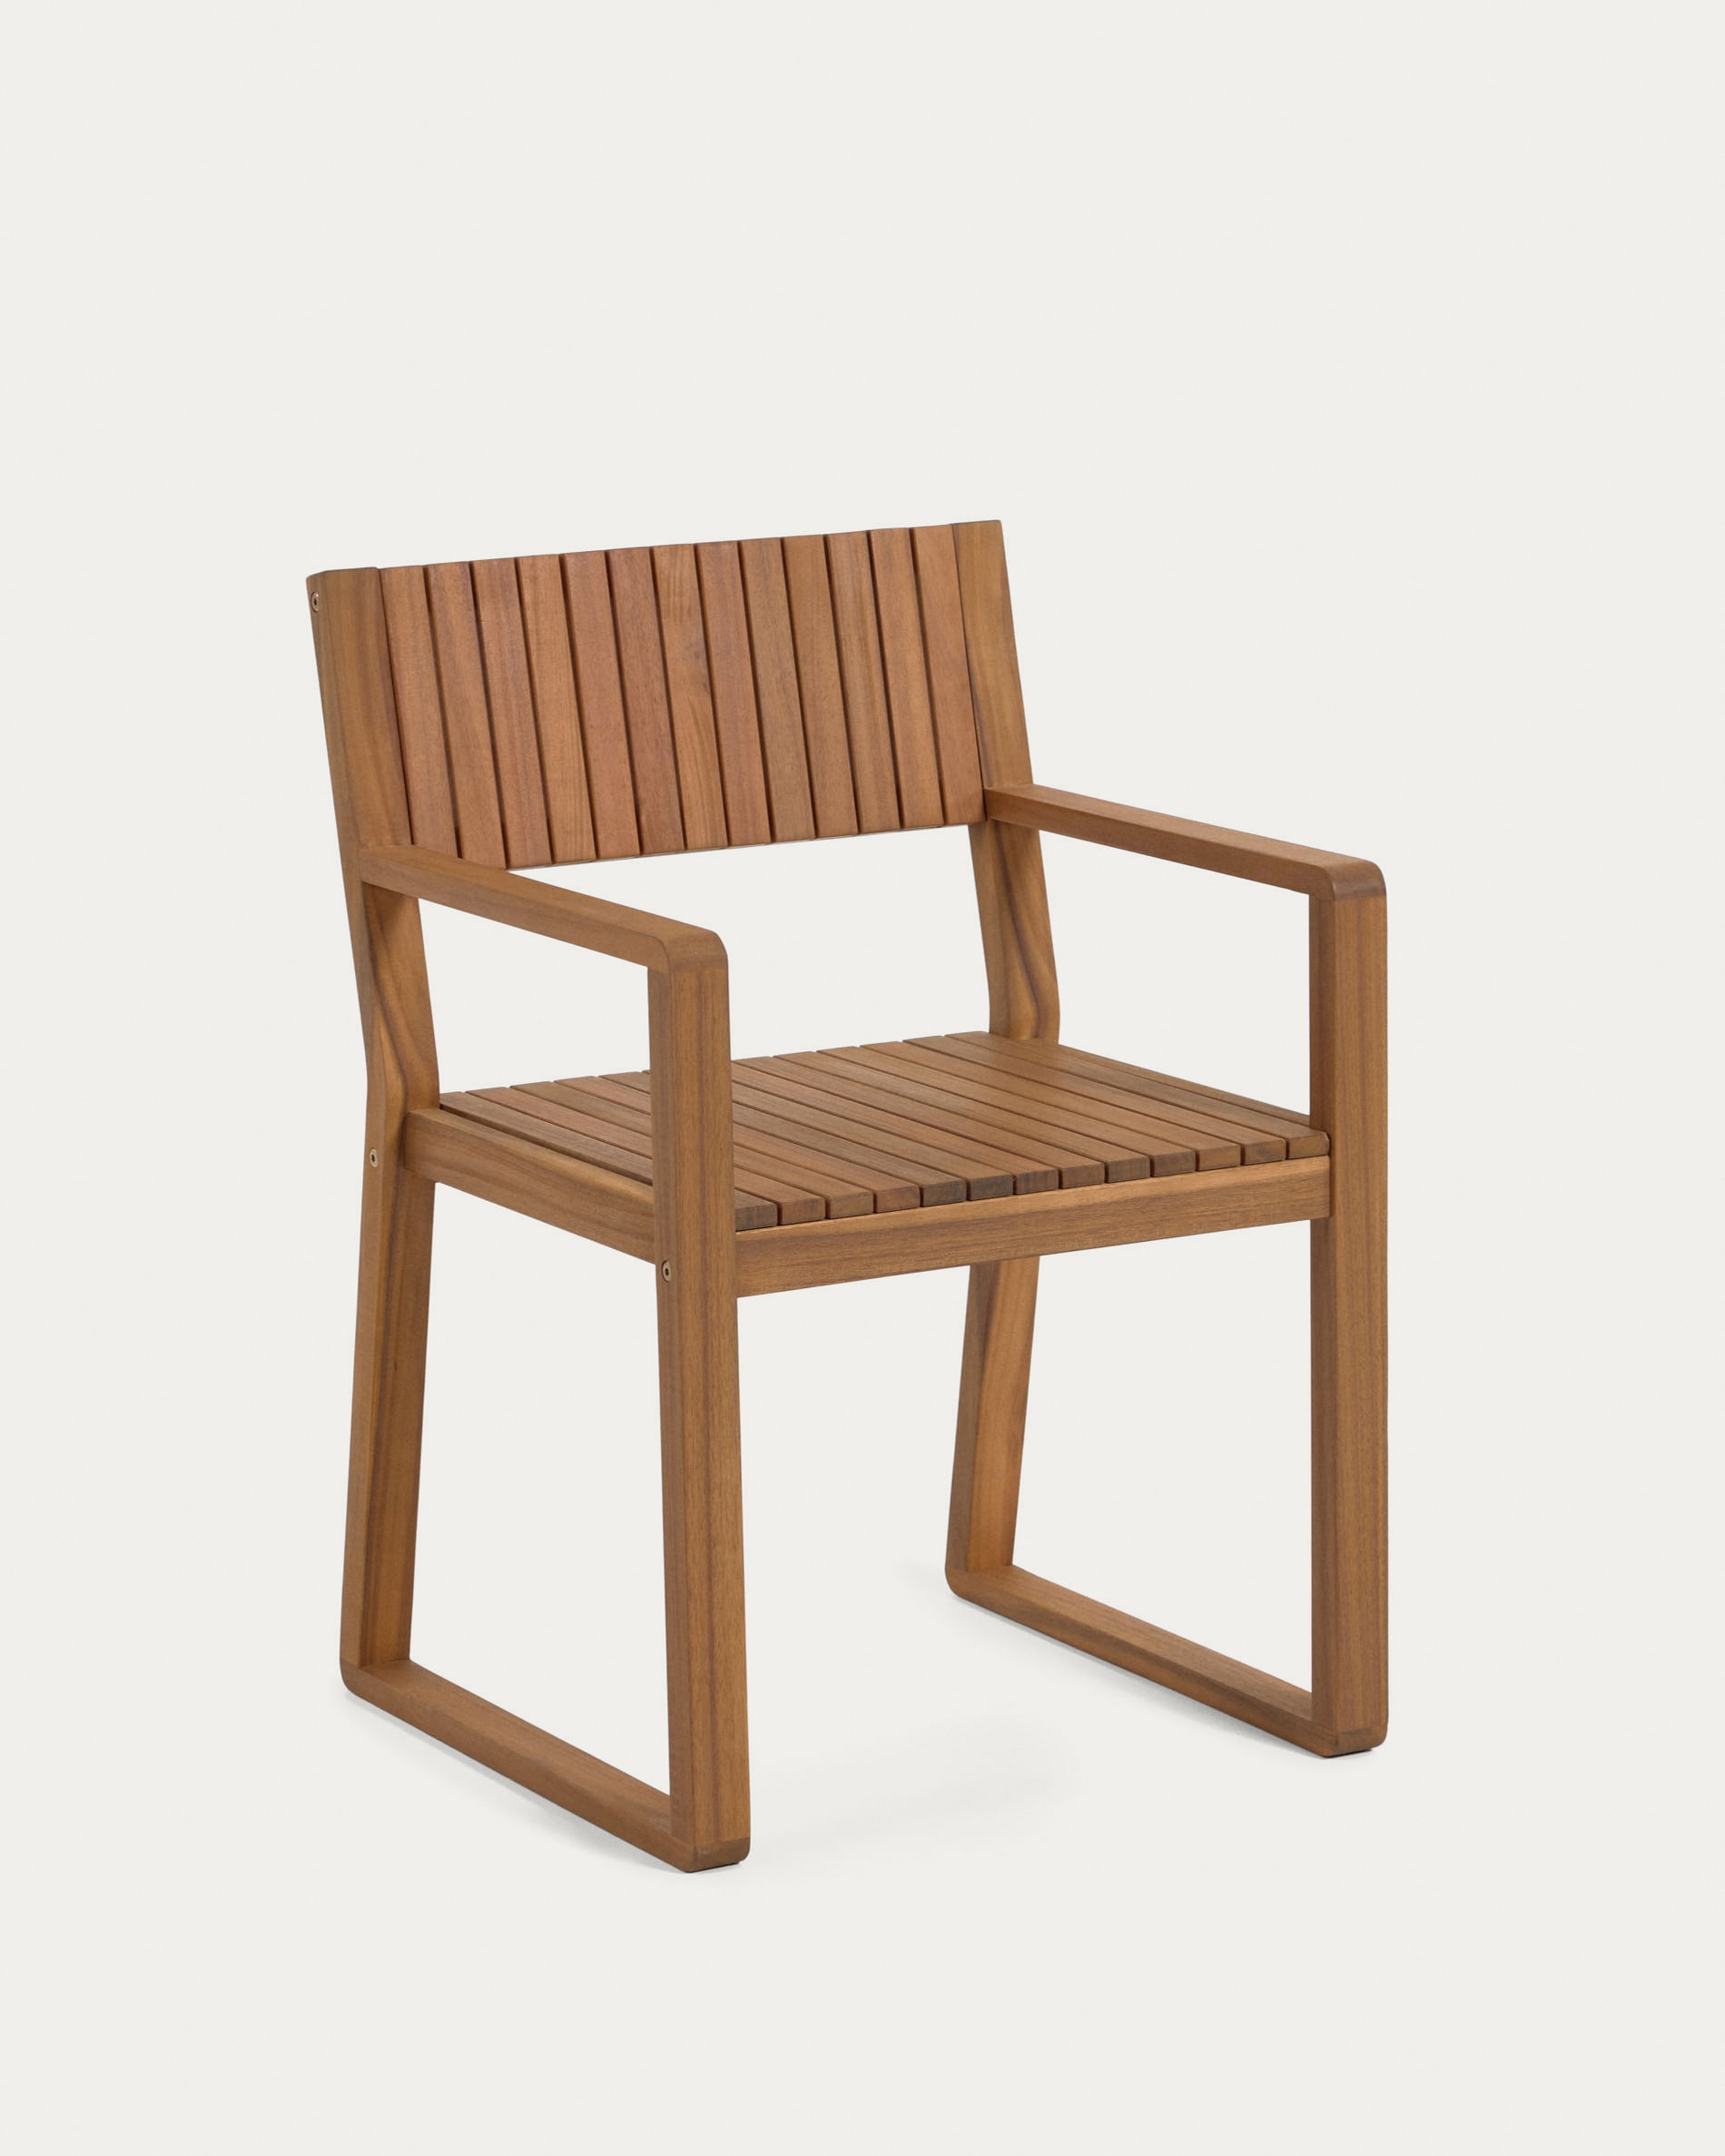 Chaise en bois empilable avec assise et dossier en bois vernis